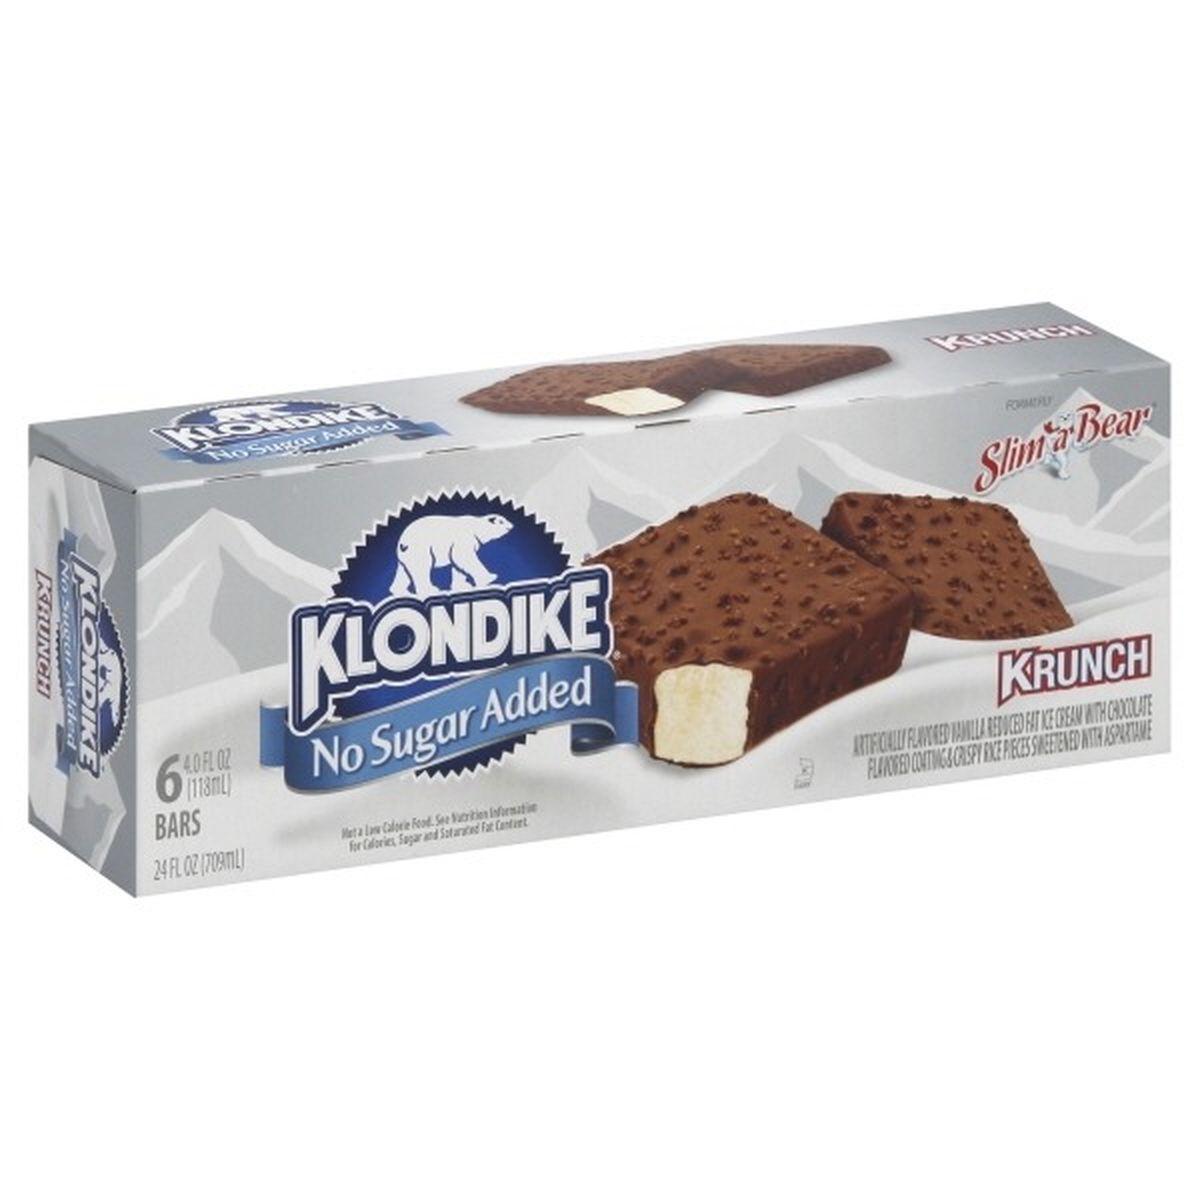 Calories in Klondike No Sugar Added Ice Cream Bars, Krunch